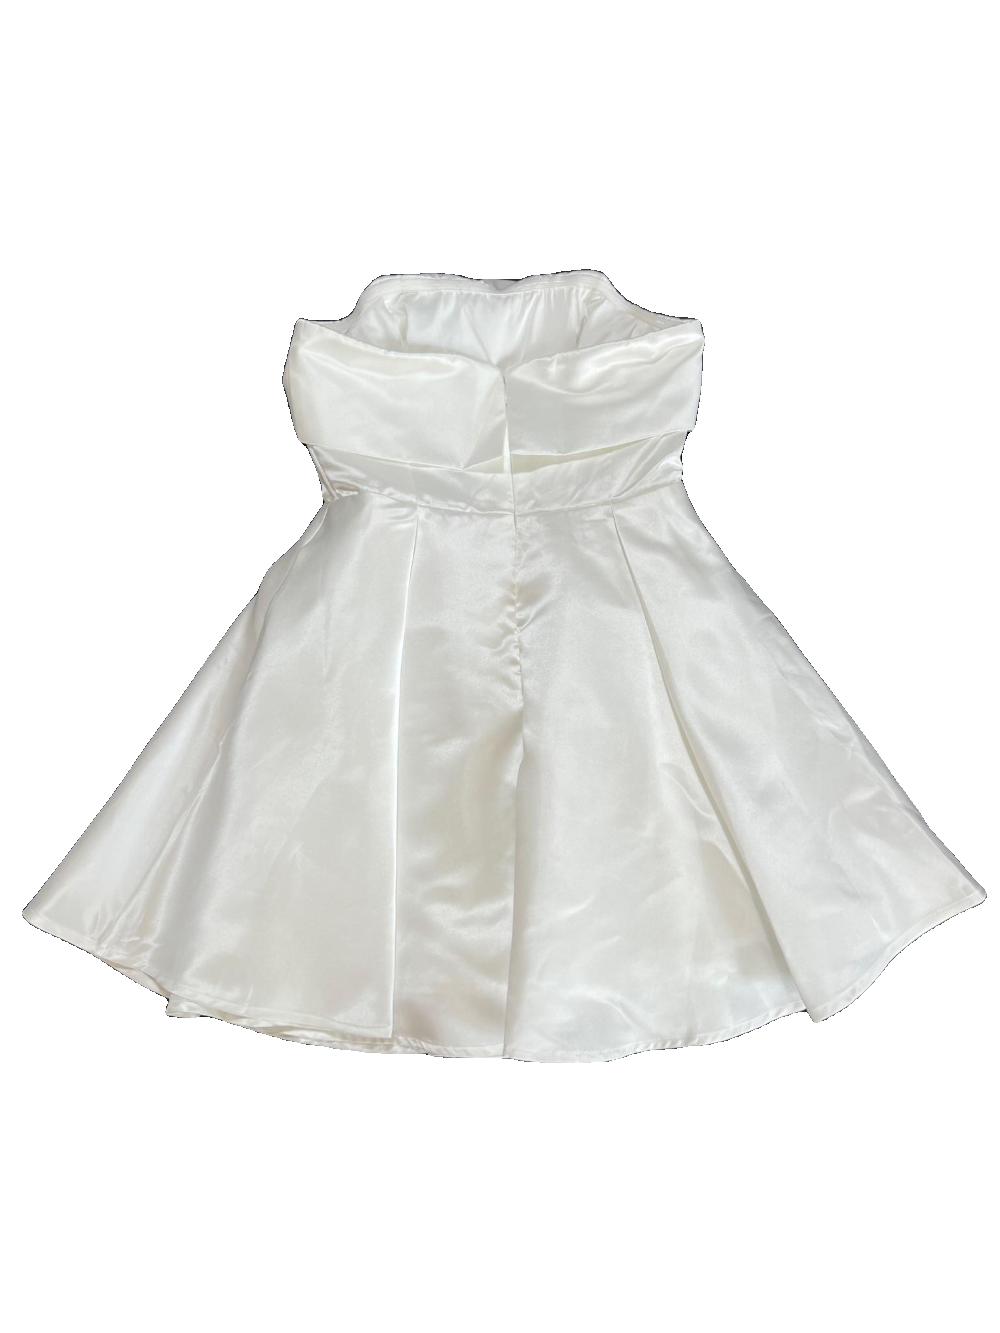 Showpo.- White "Valora" Mini Dress NEW WITH TAGS!